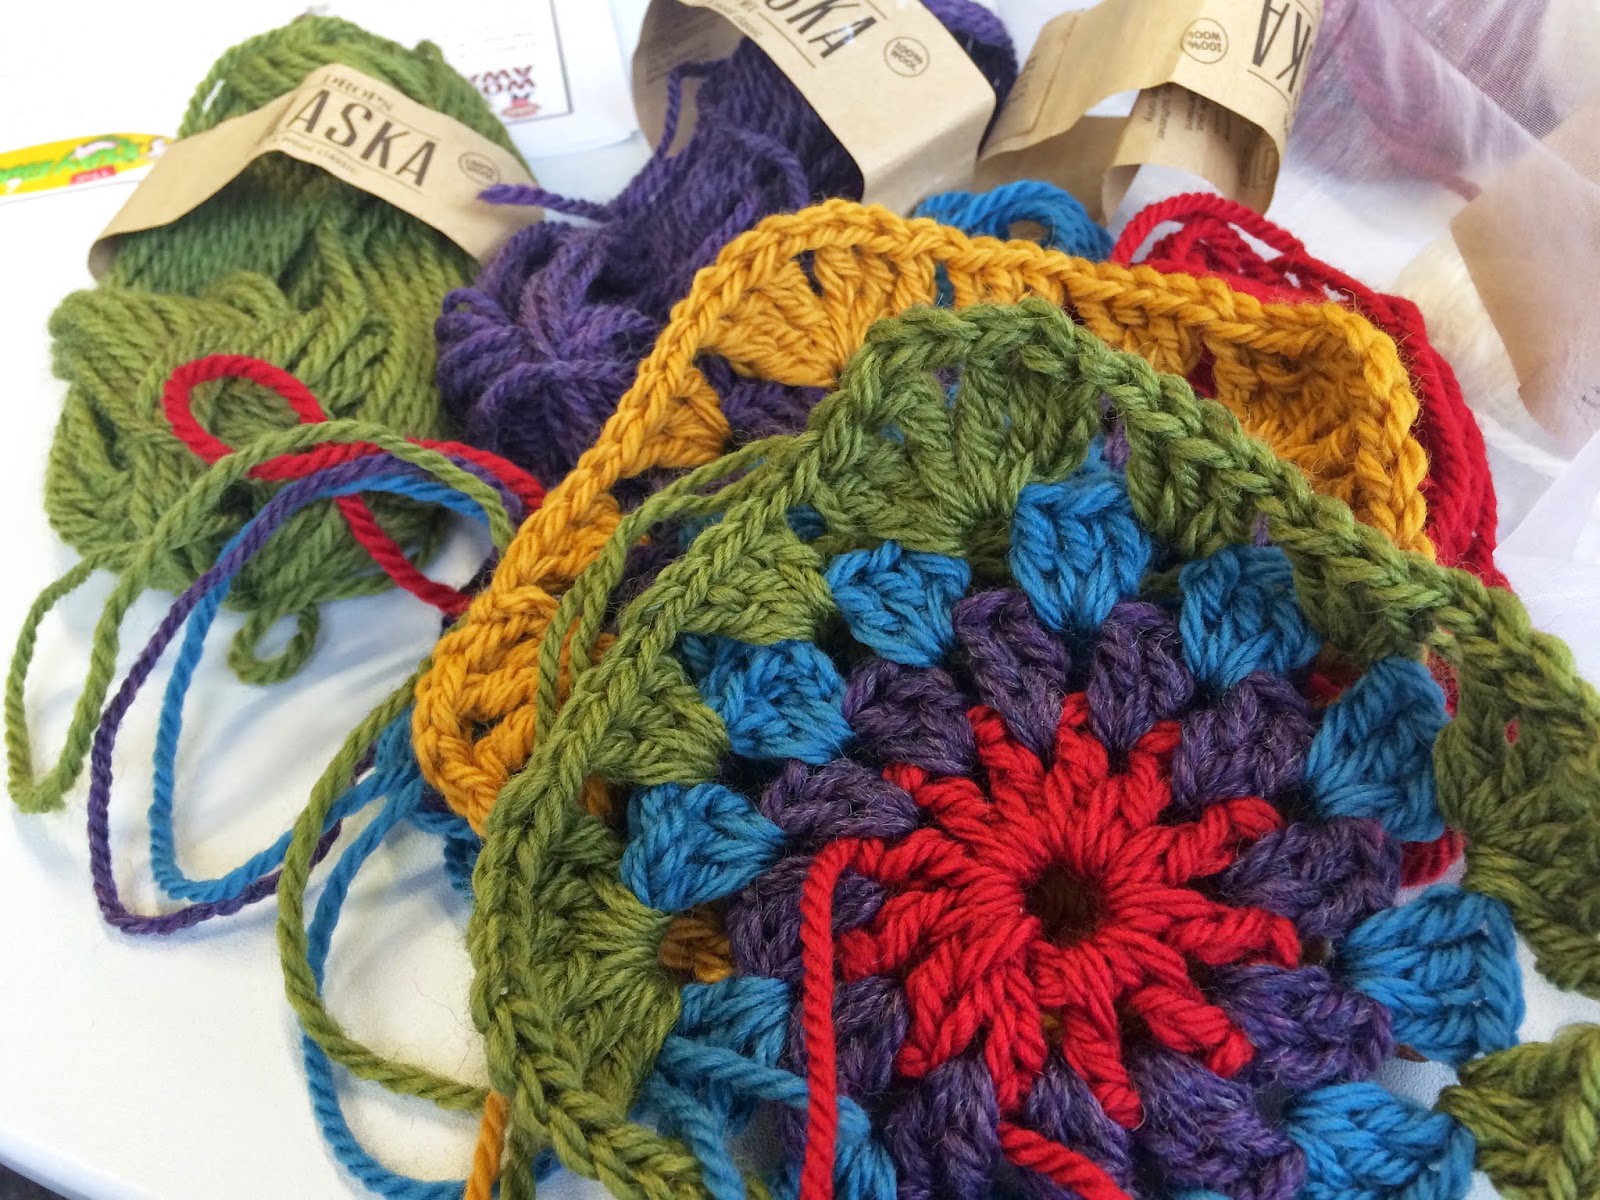 Designing a crochet granny blanket